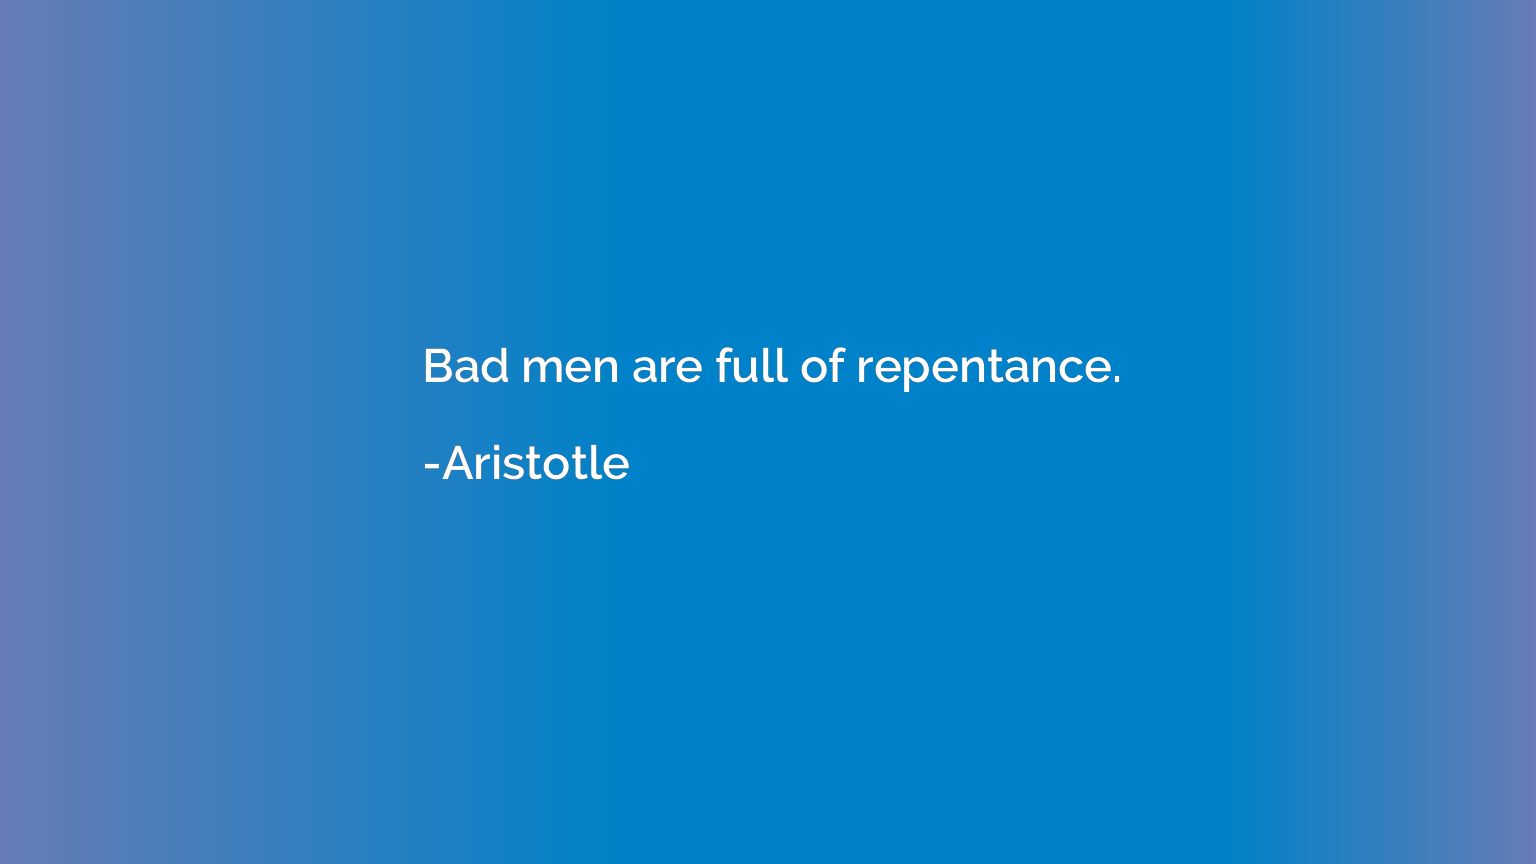 Bad men are full of repentance.